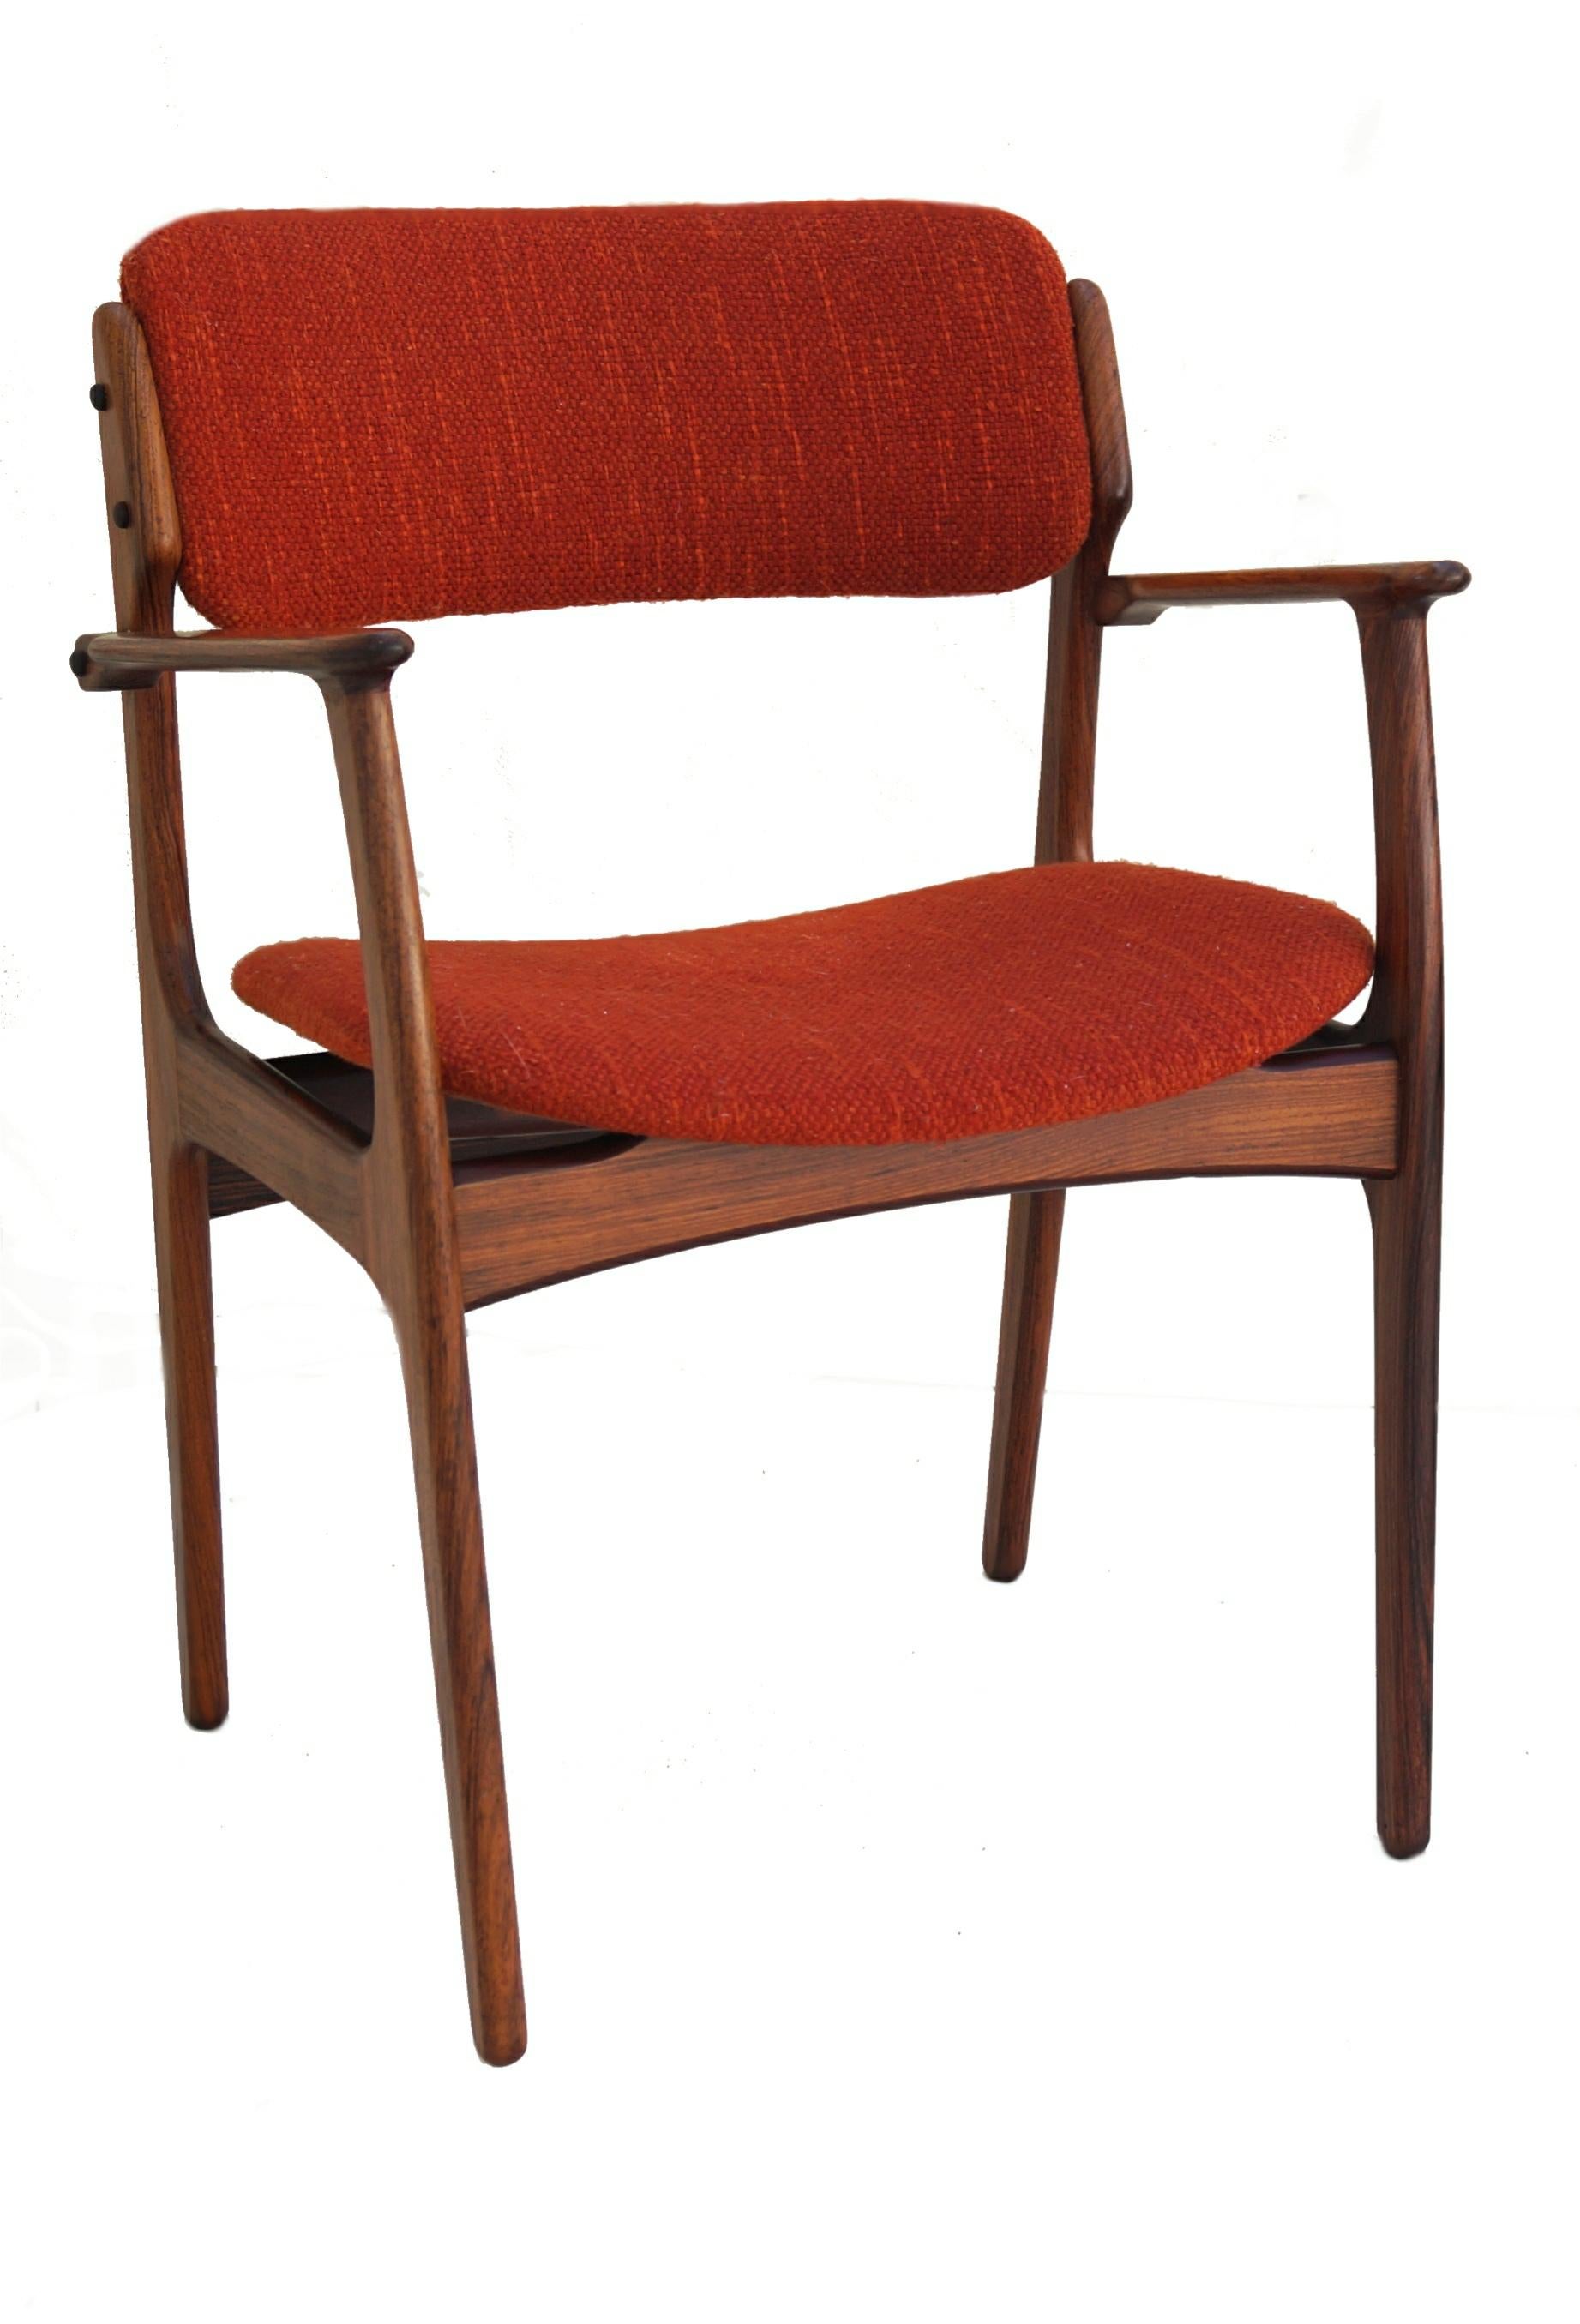 Pair Rosewood Mid-Century Danish Modern Arm Chair Chairs Erik Buch Model 50 For Sale 2